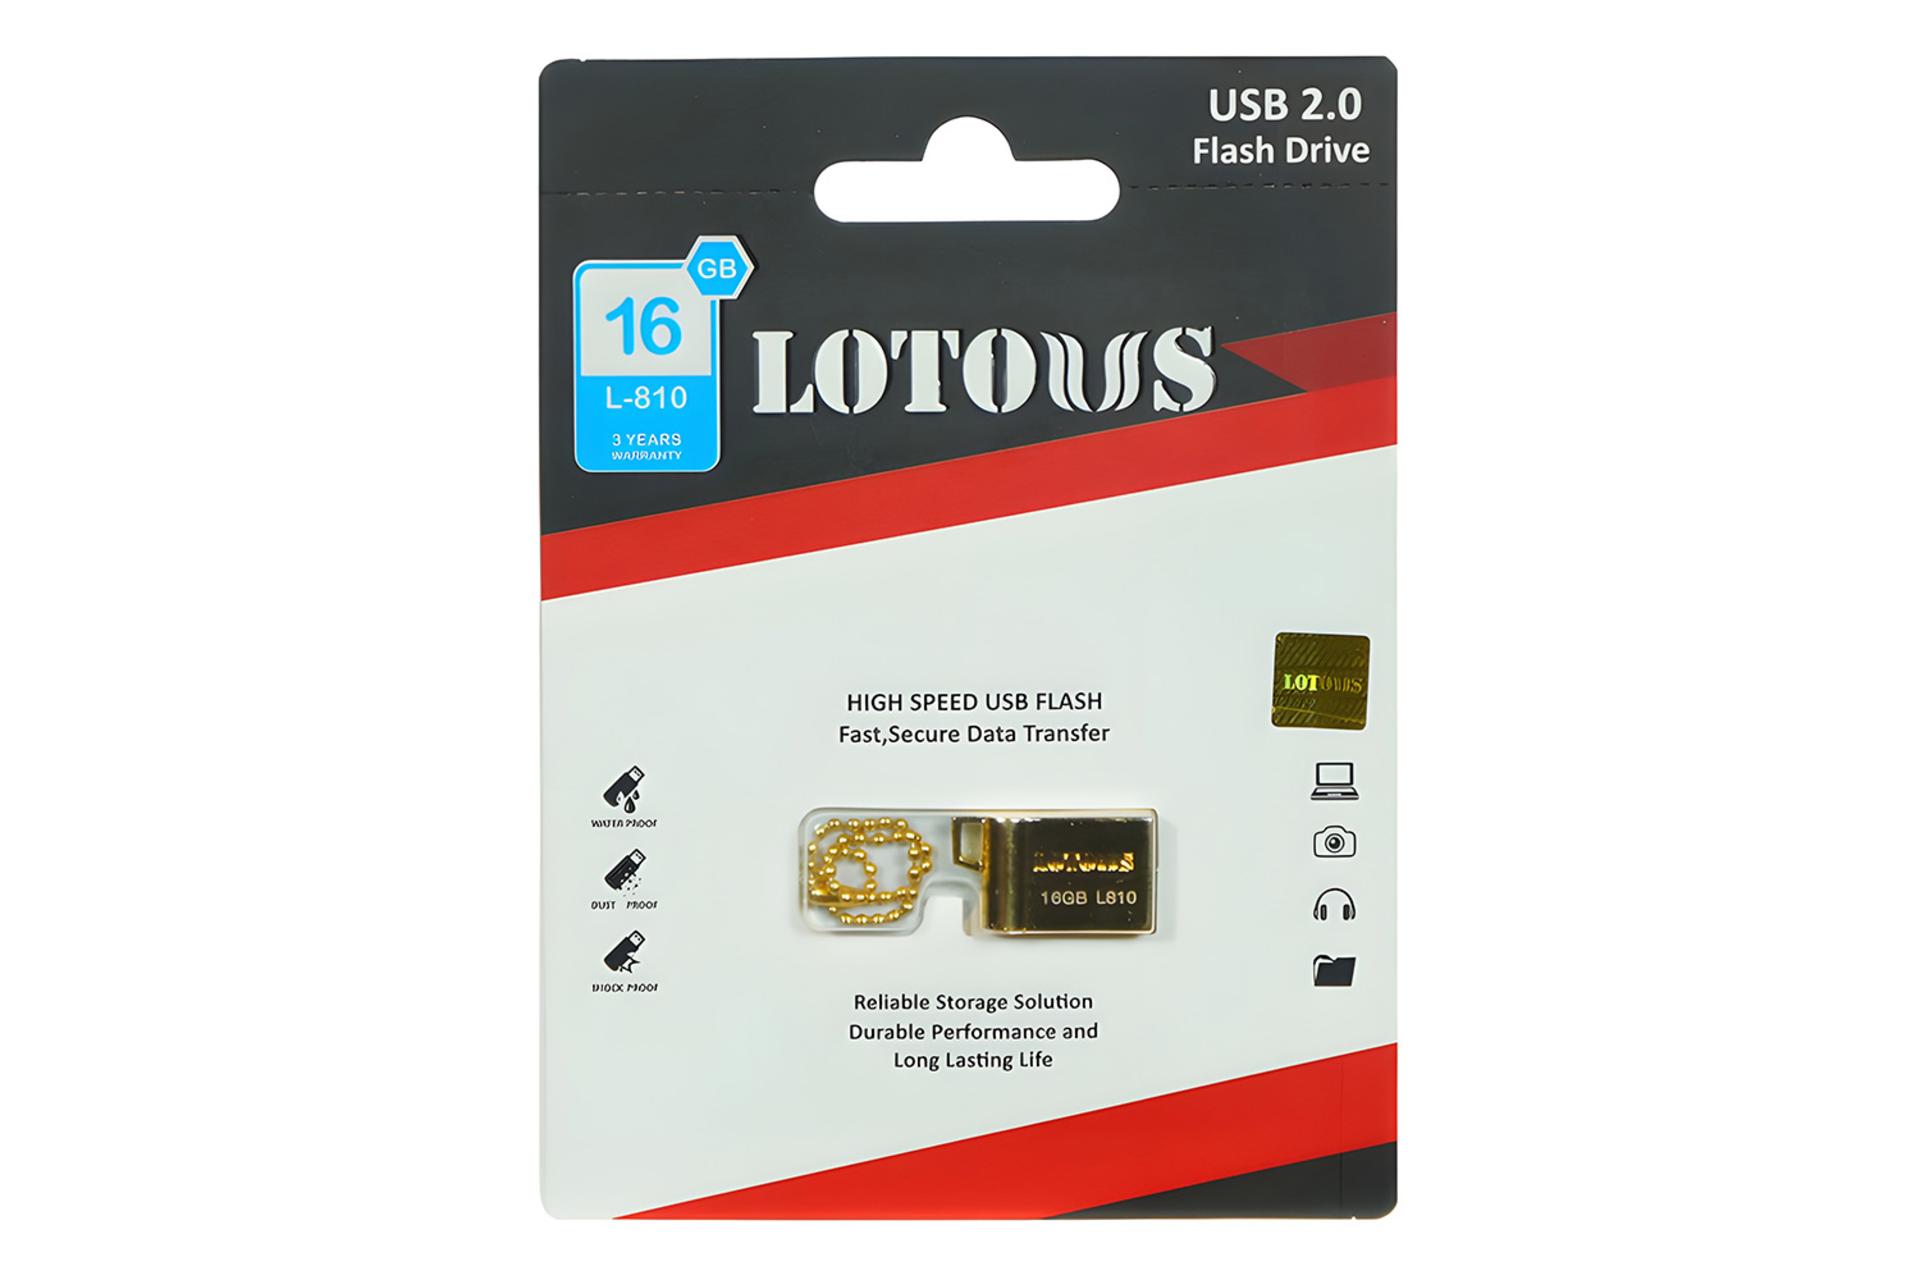 جعبه فلش مموری لوتوس Lotous L-810 16GB